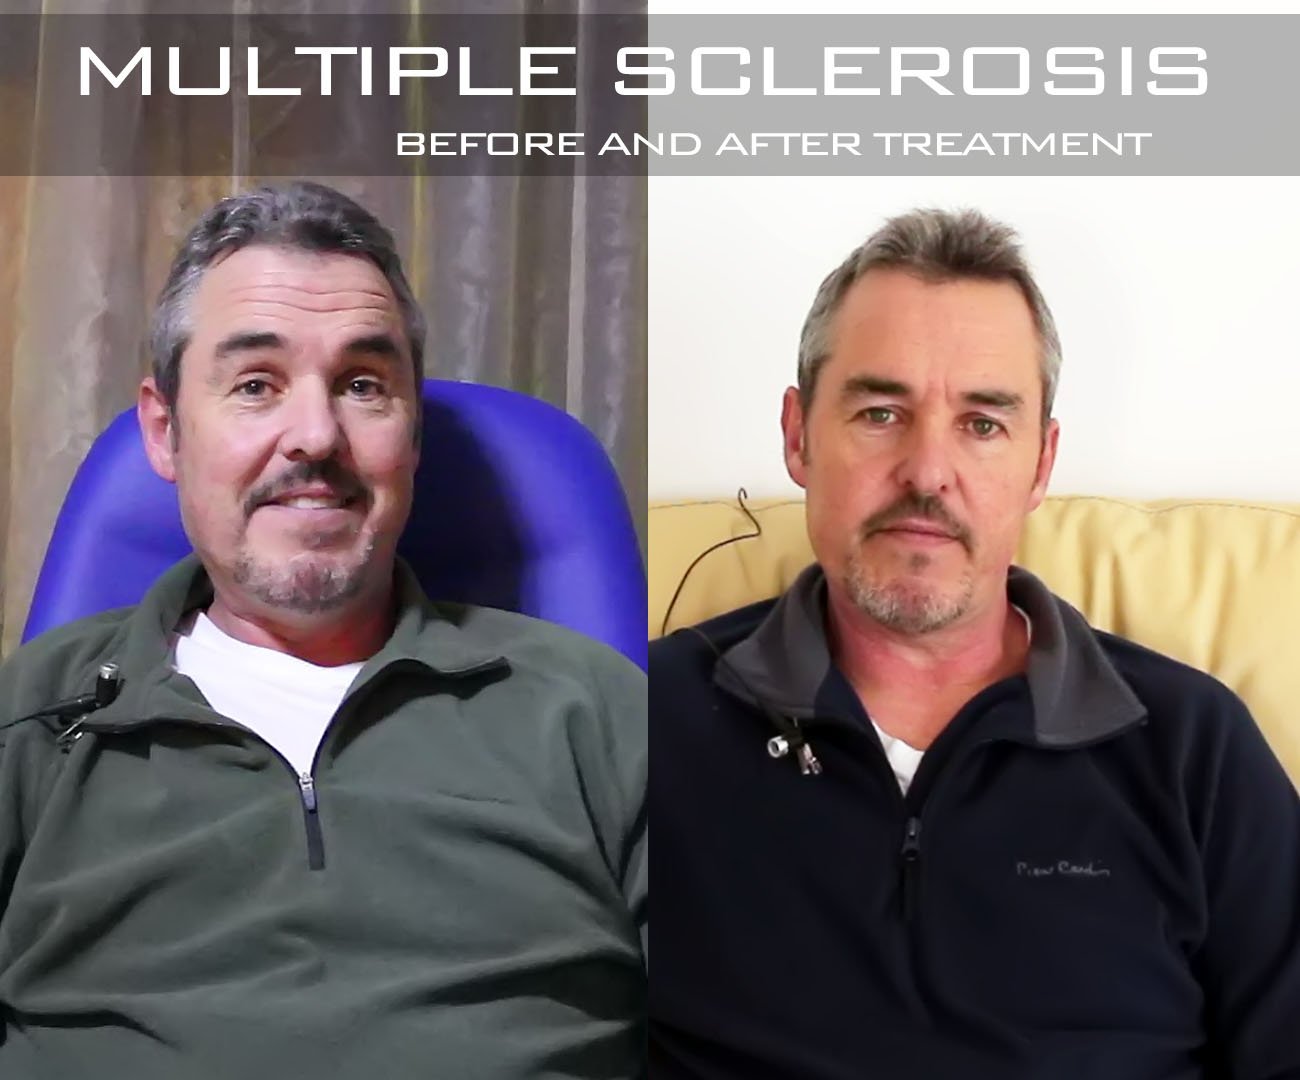 stem cell treatment for multiple sclerosis